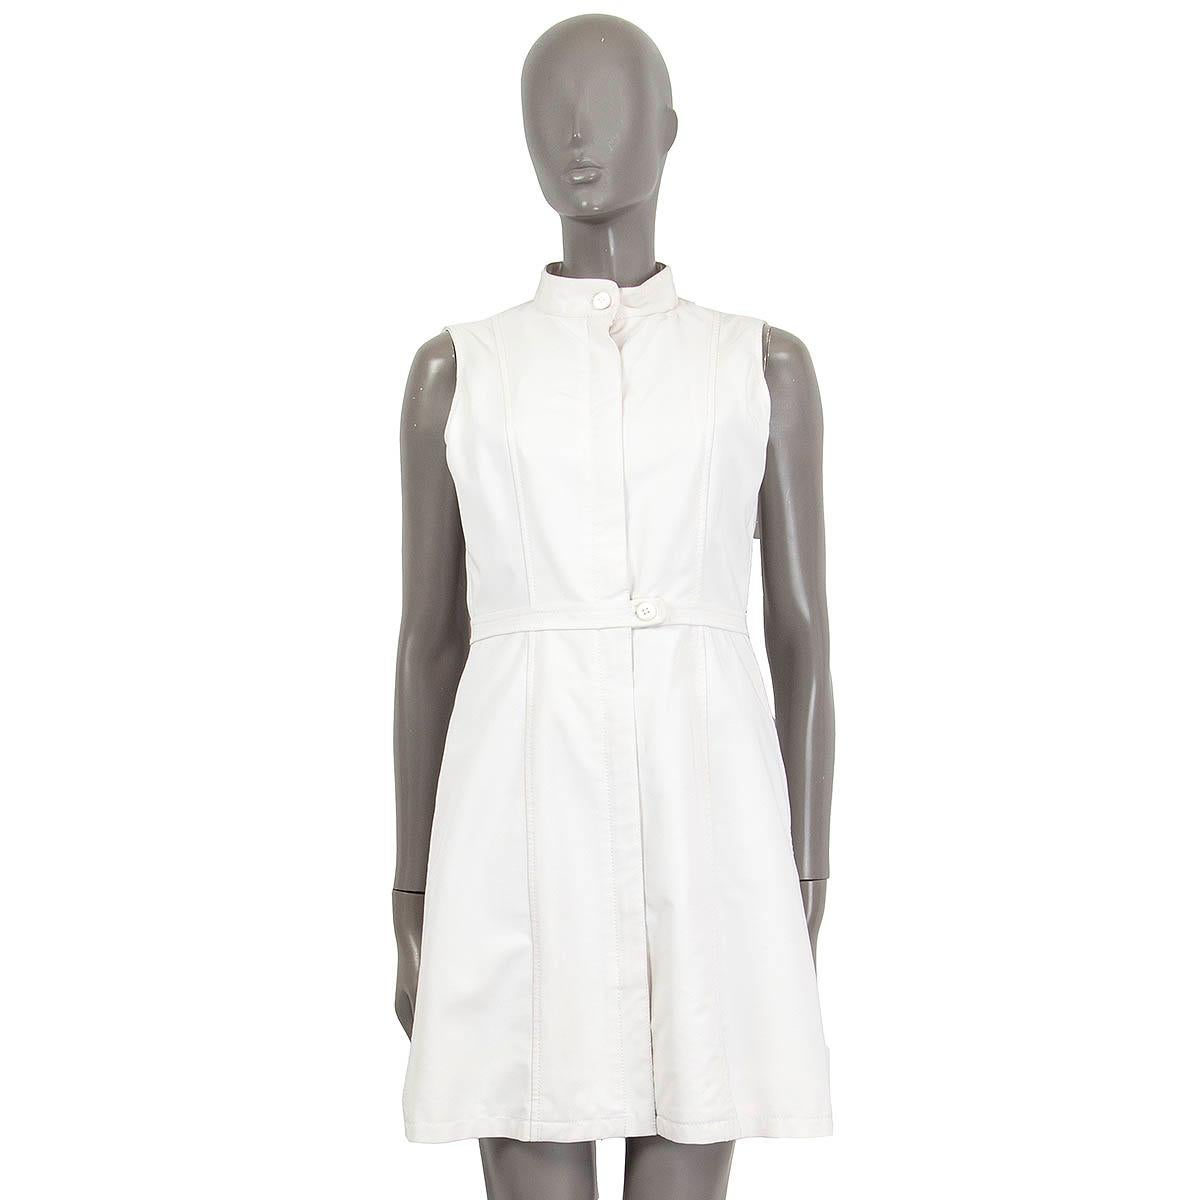 PRADA ivory nylon MOCK NECK SLEEVELESS Dress 42 M